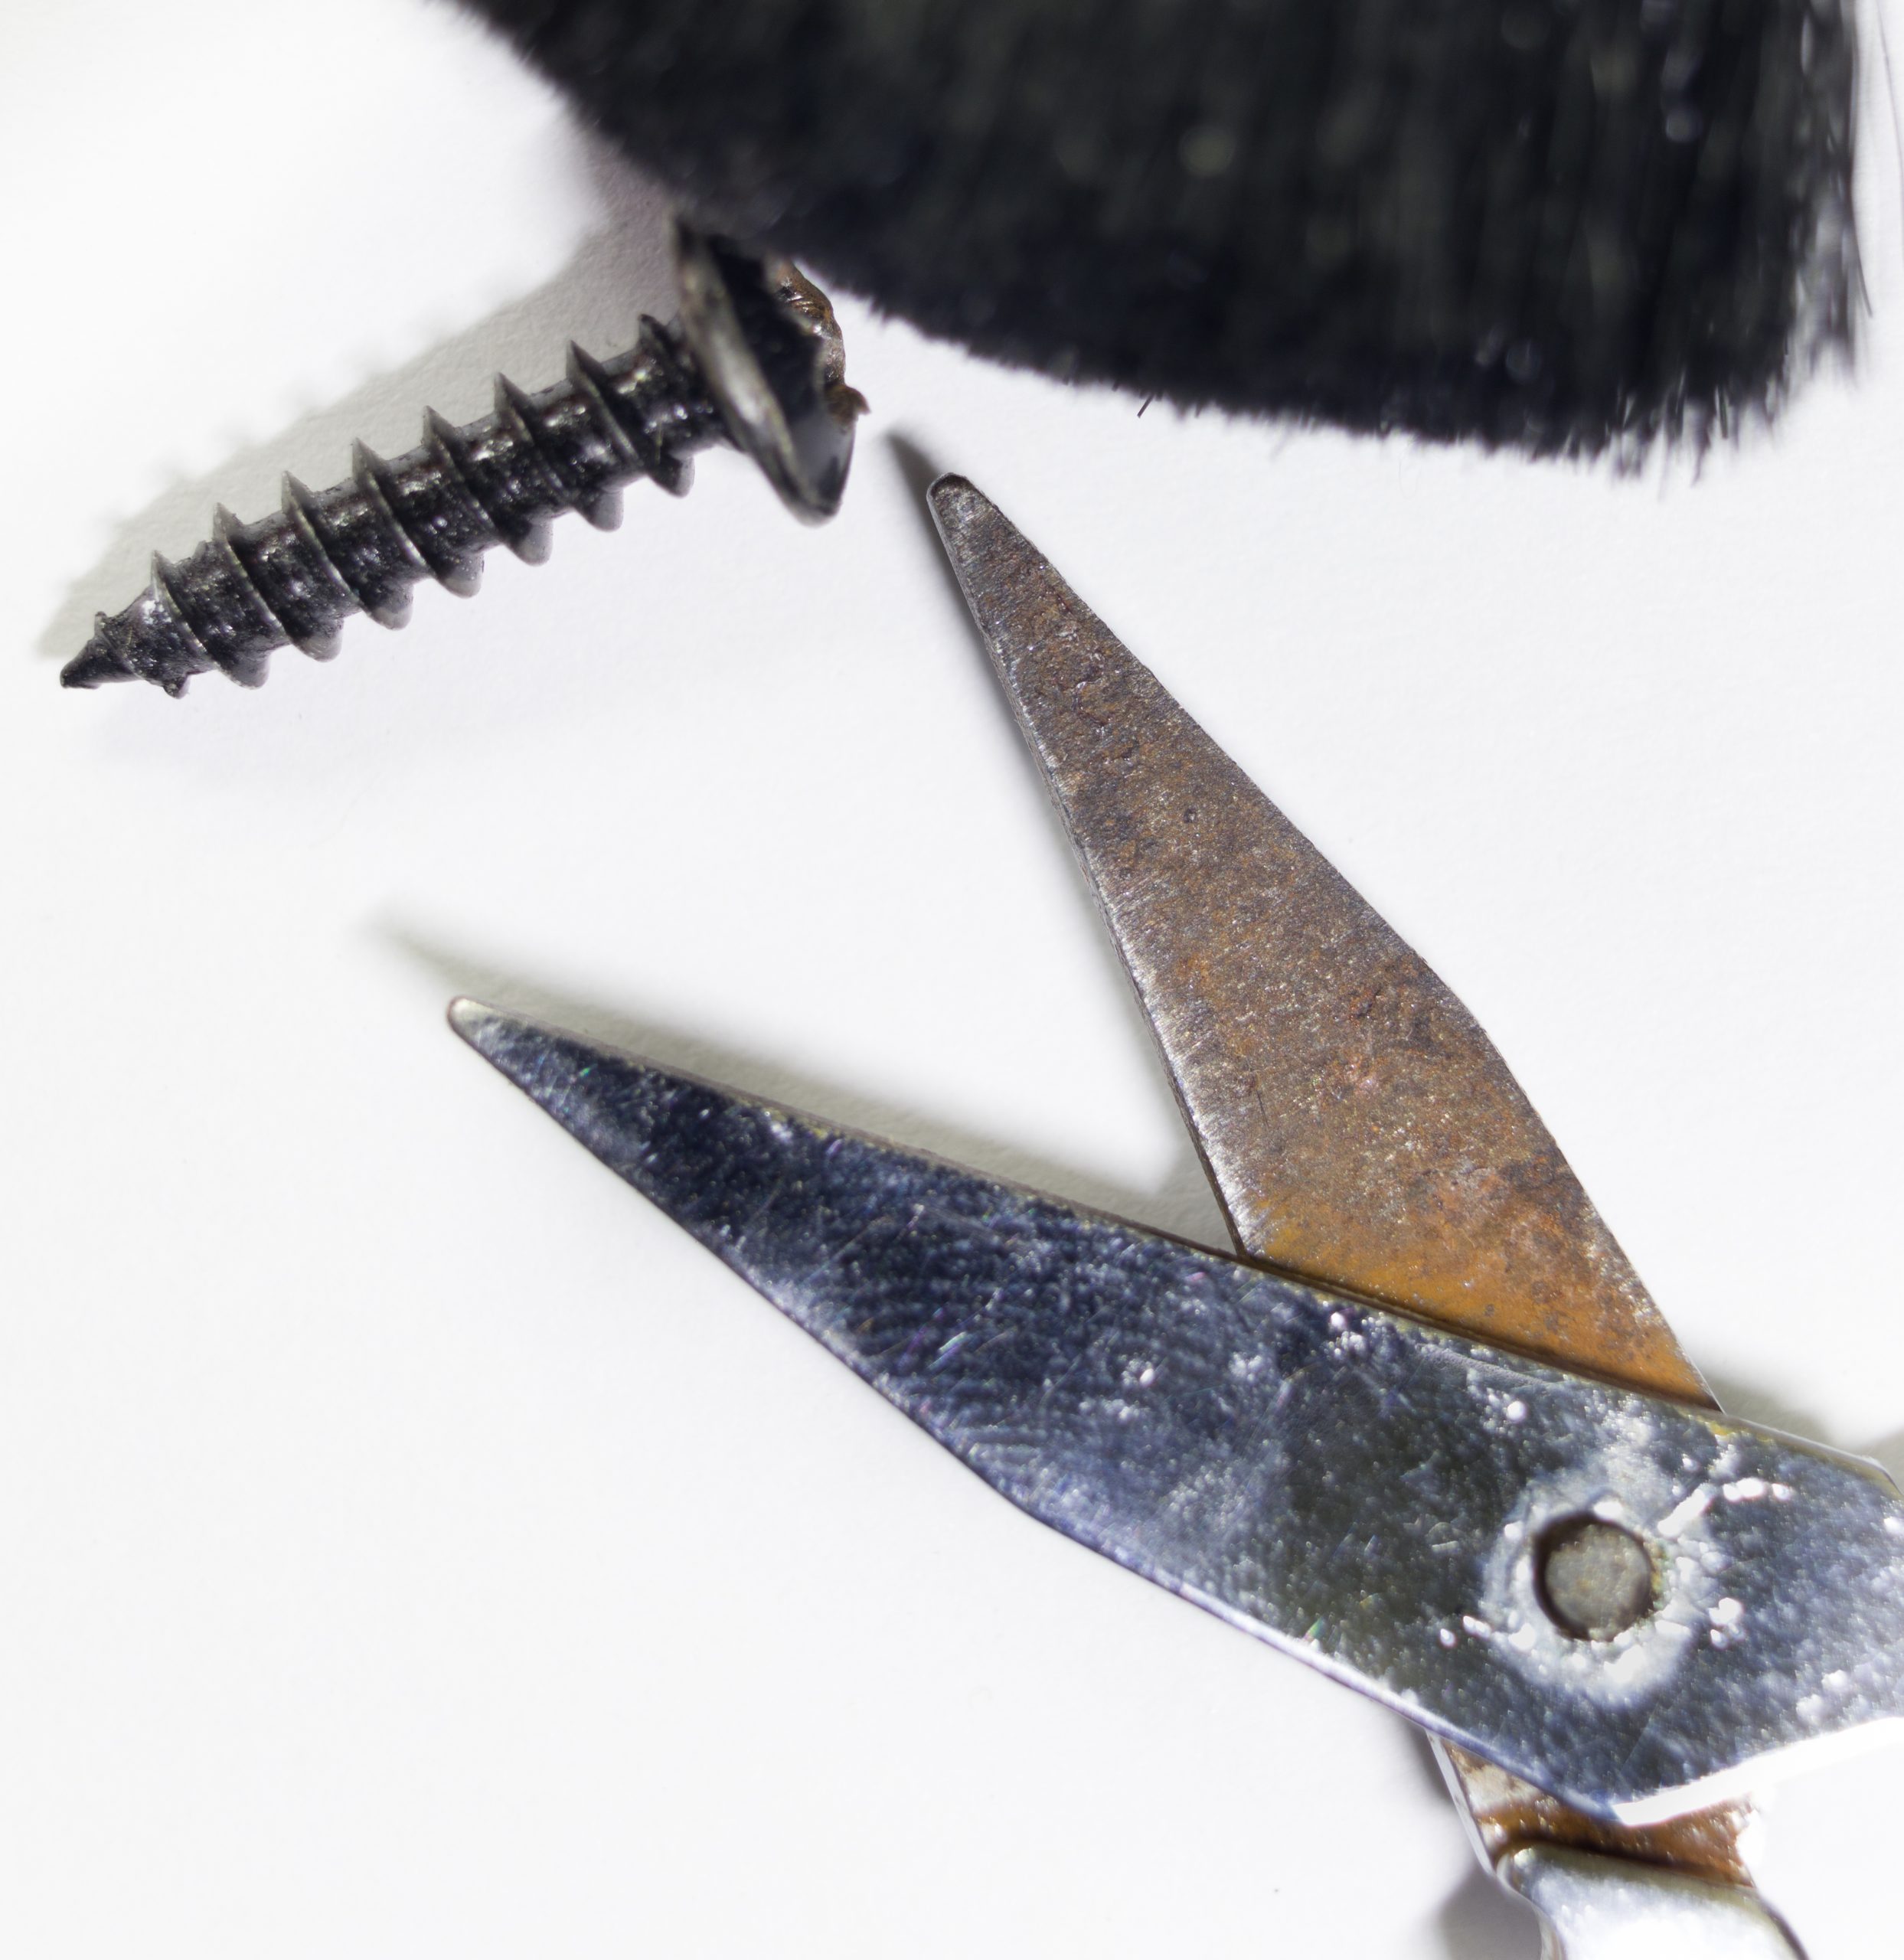 Portrait of a screw and a scissor